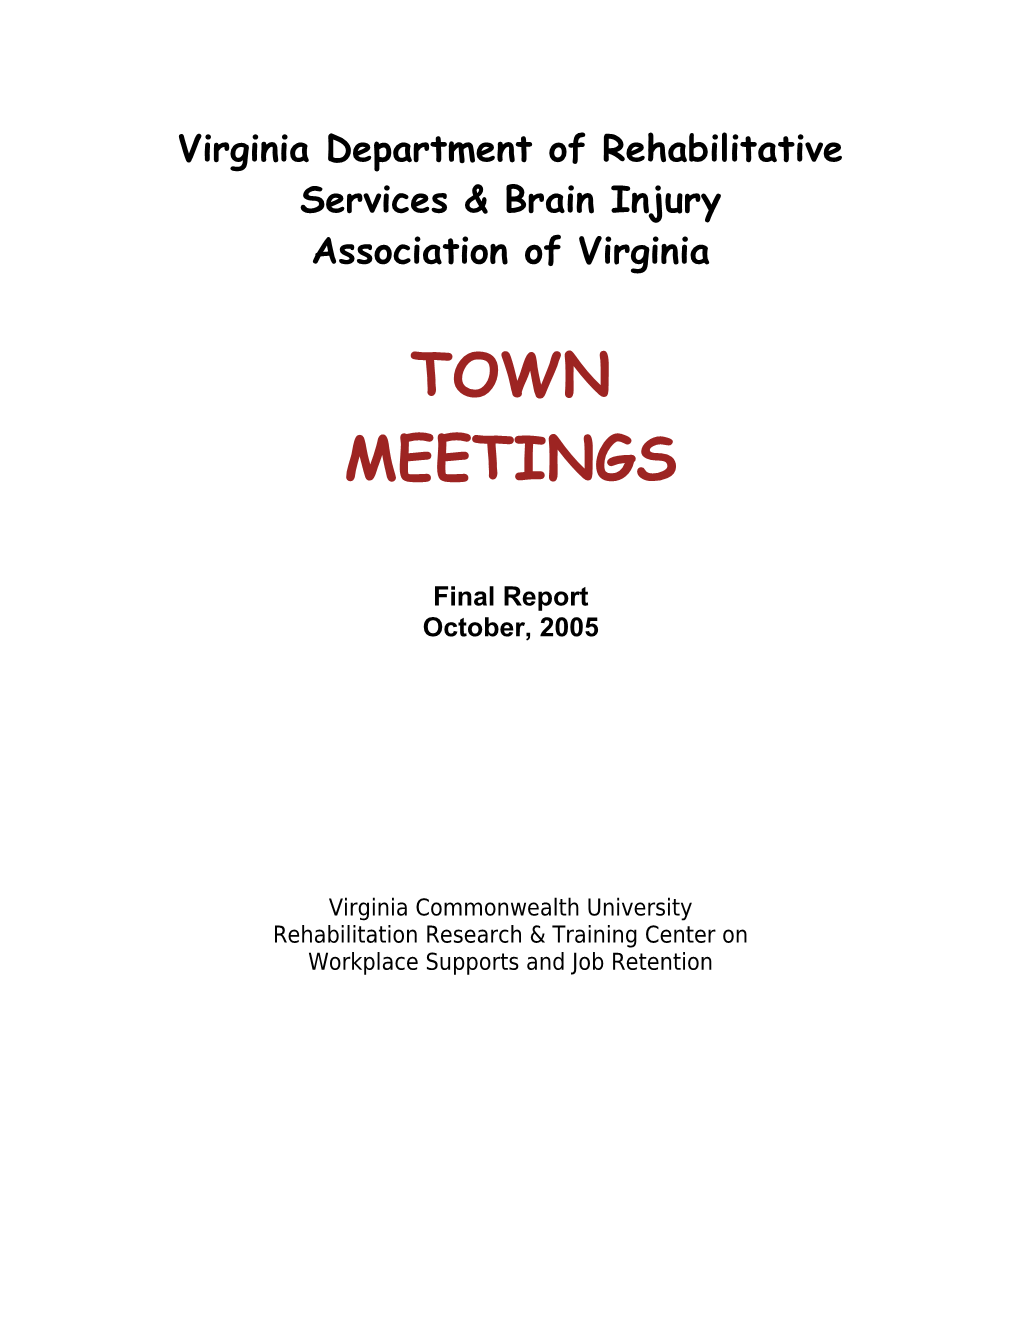 October 2005 Town Meeting Final Report